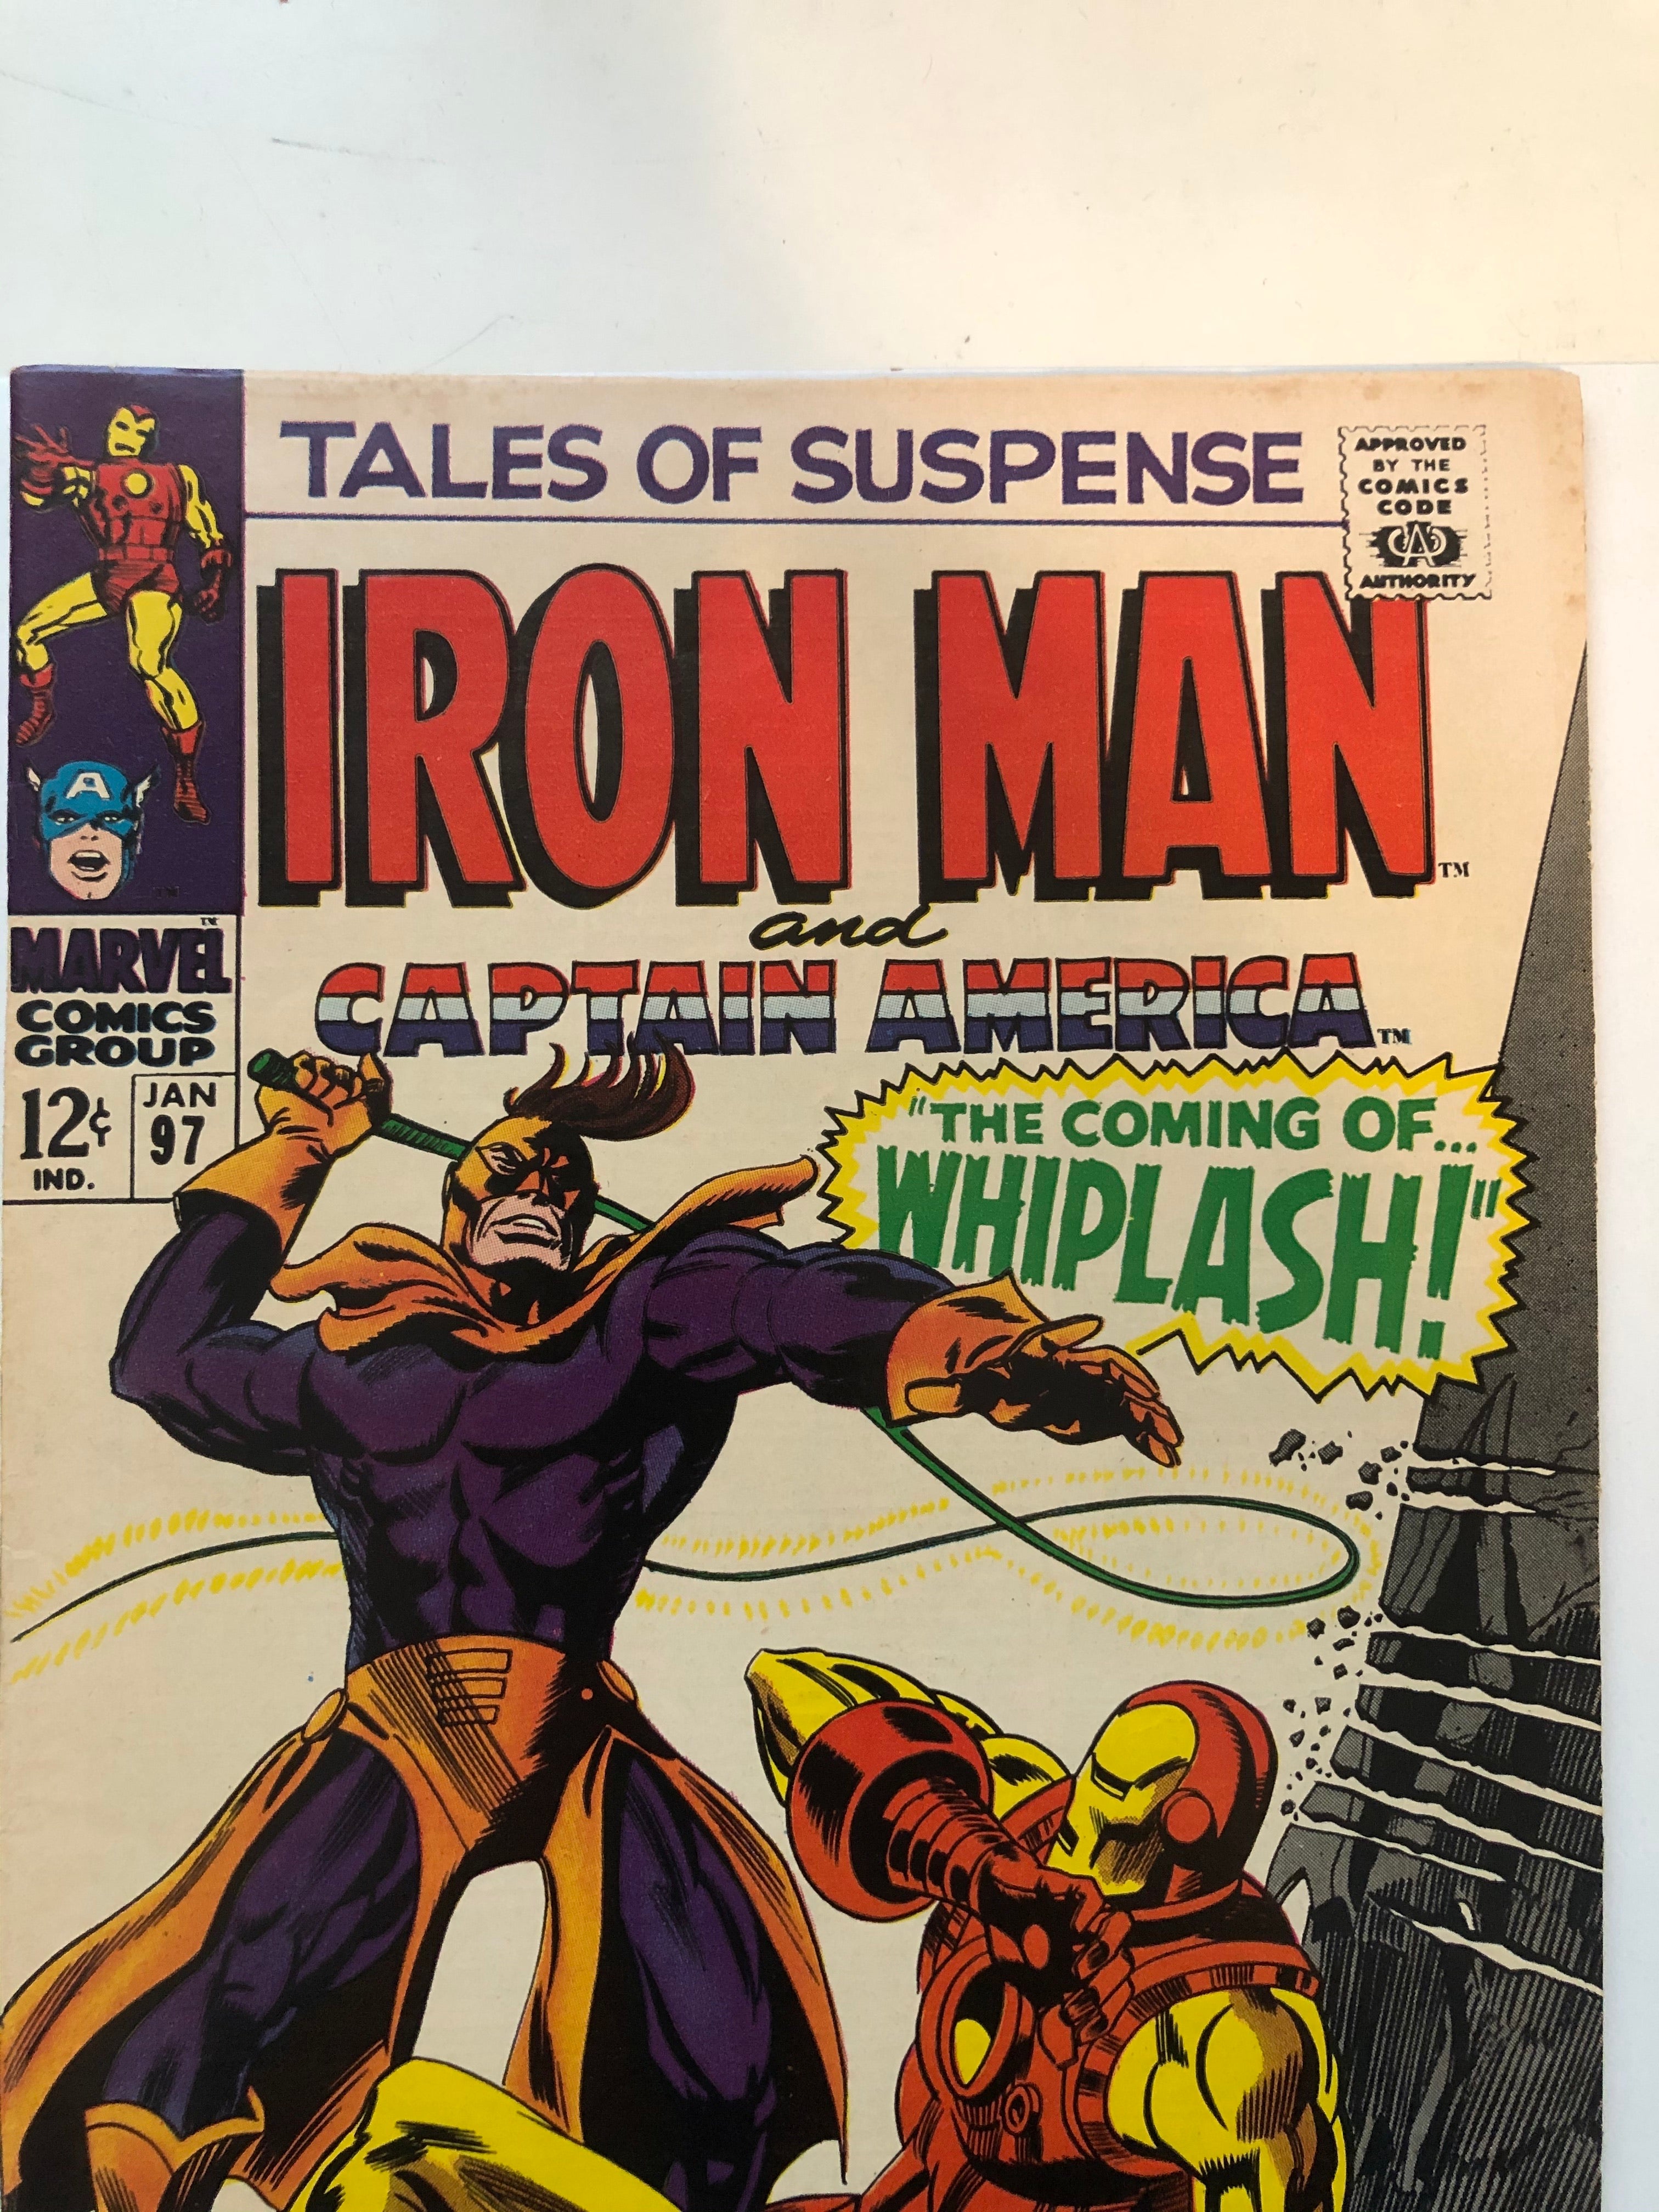 Iron Man #97 first appearance Whiplash comic book